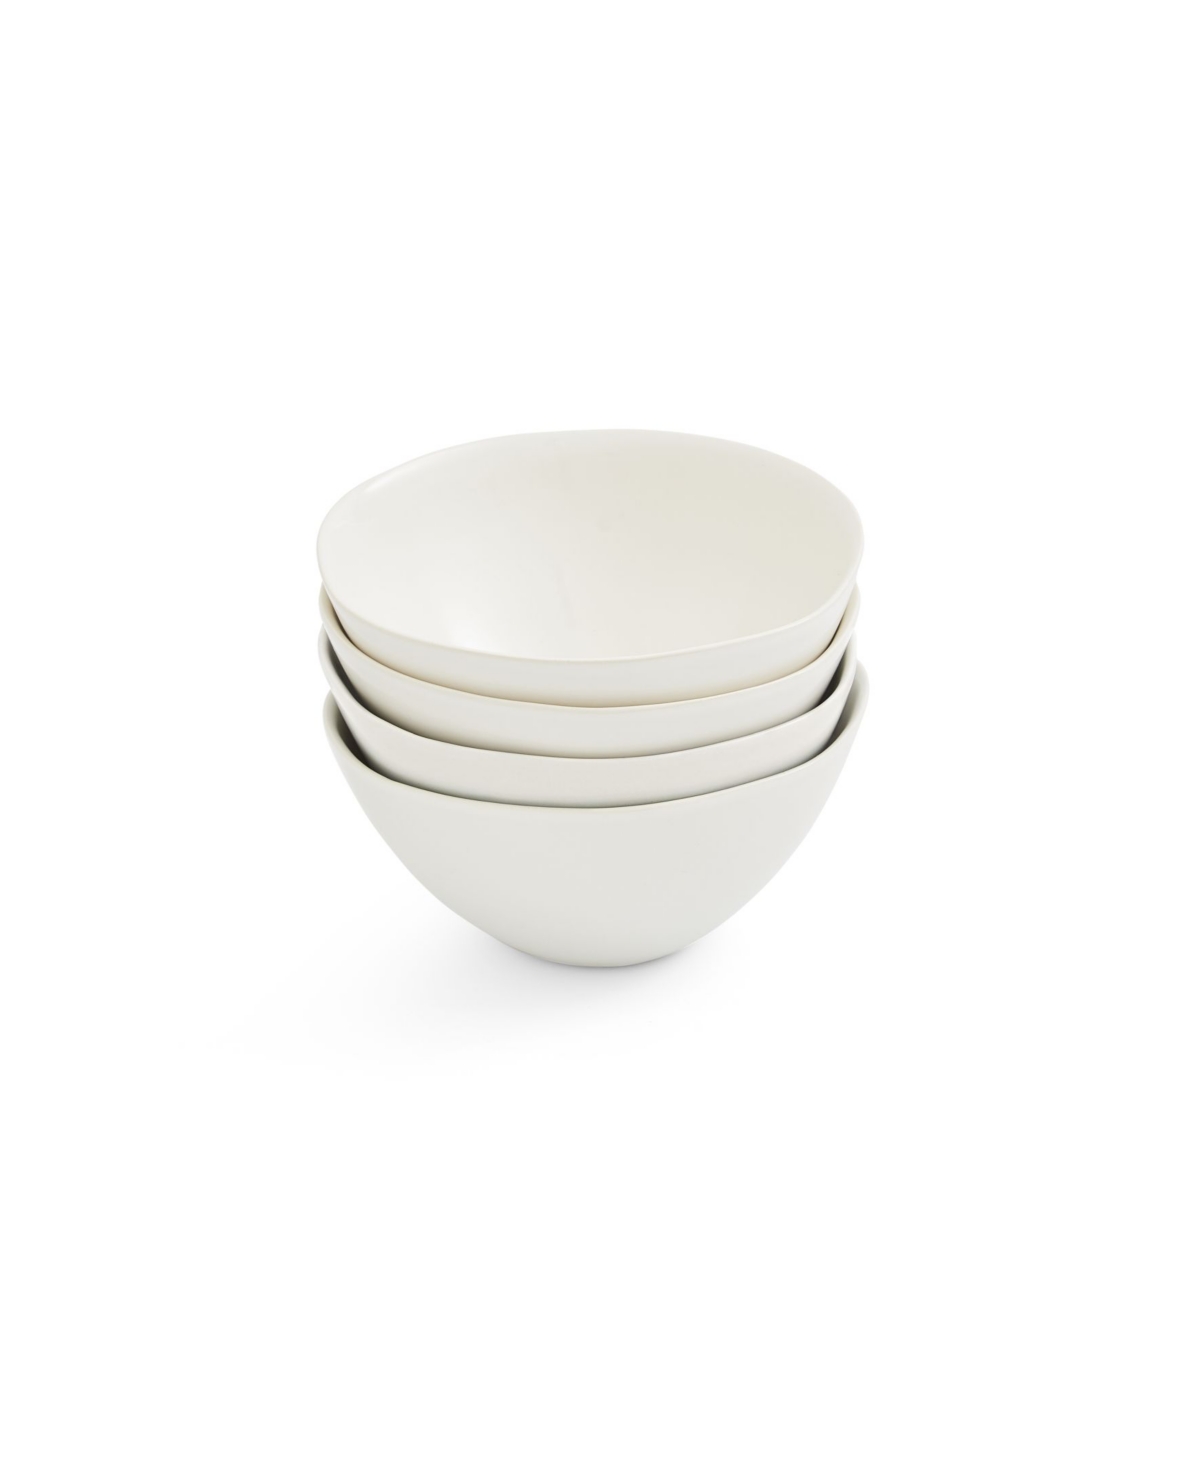 Sophie Conran Arbor Creamy White All Purpose Bowl, Set of 4 - Creamy White